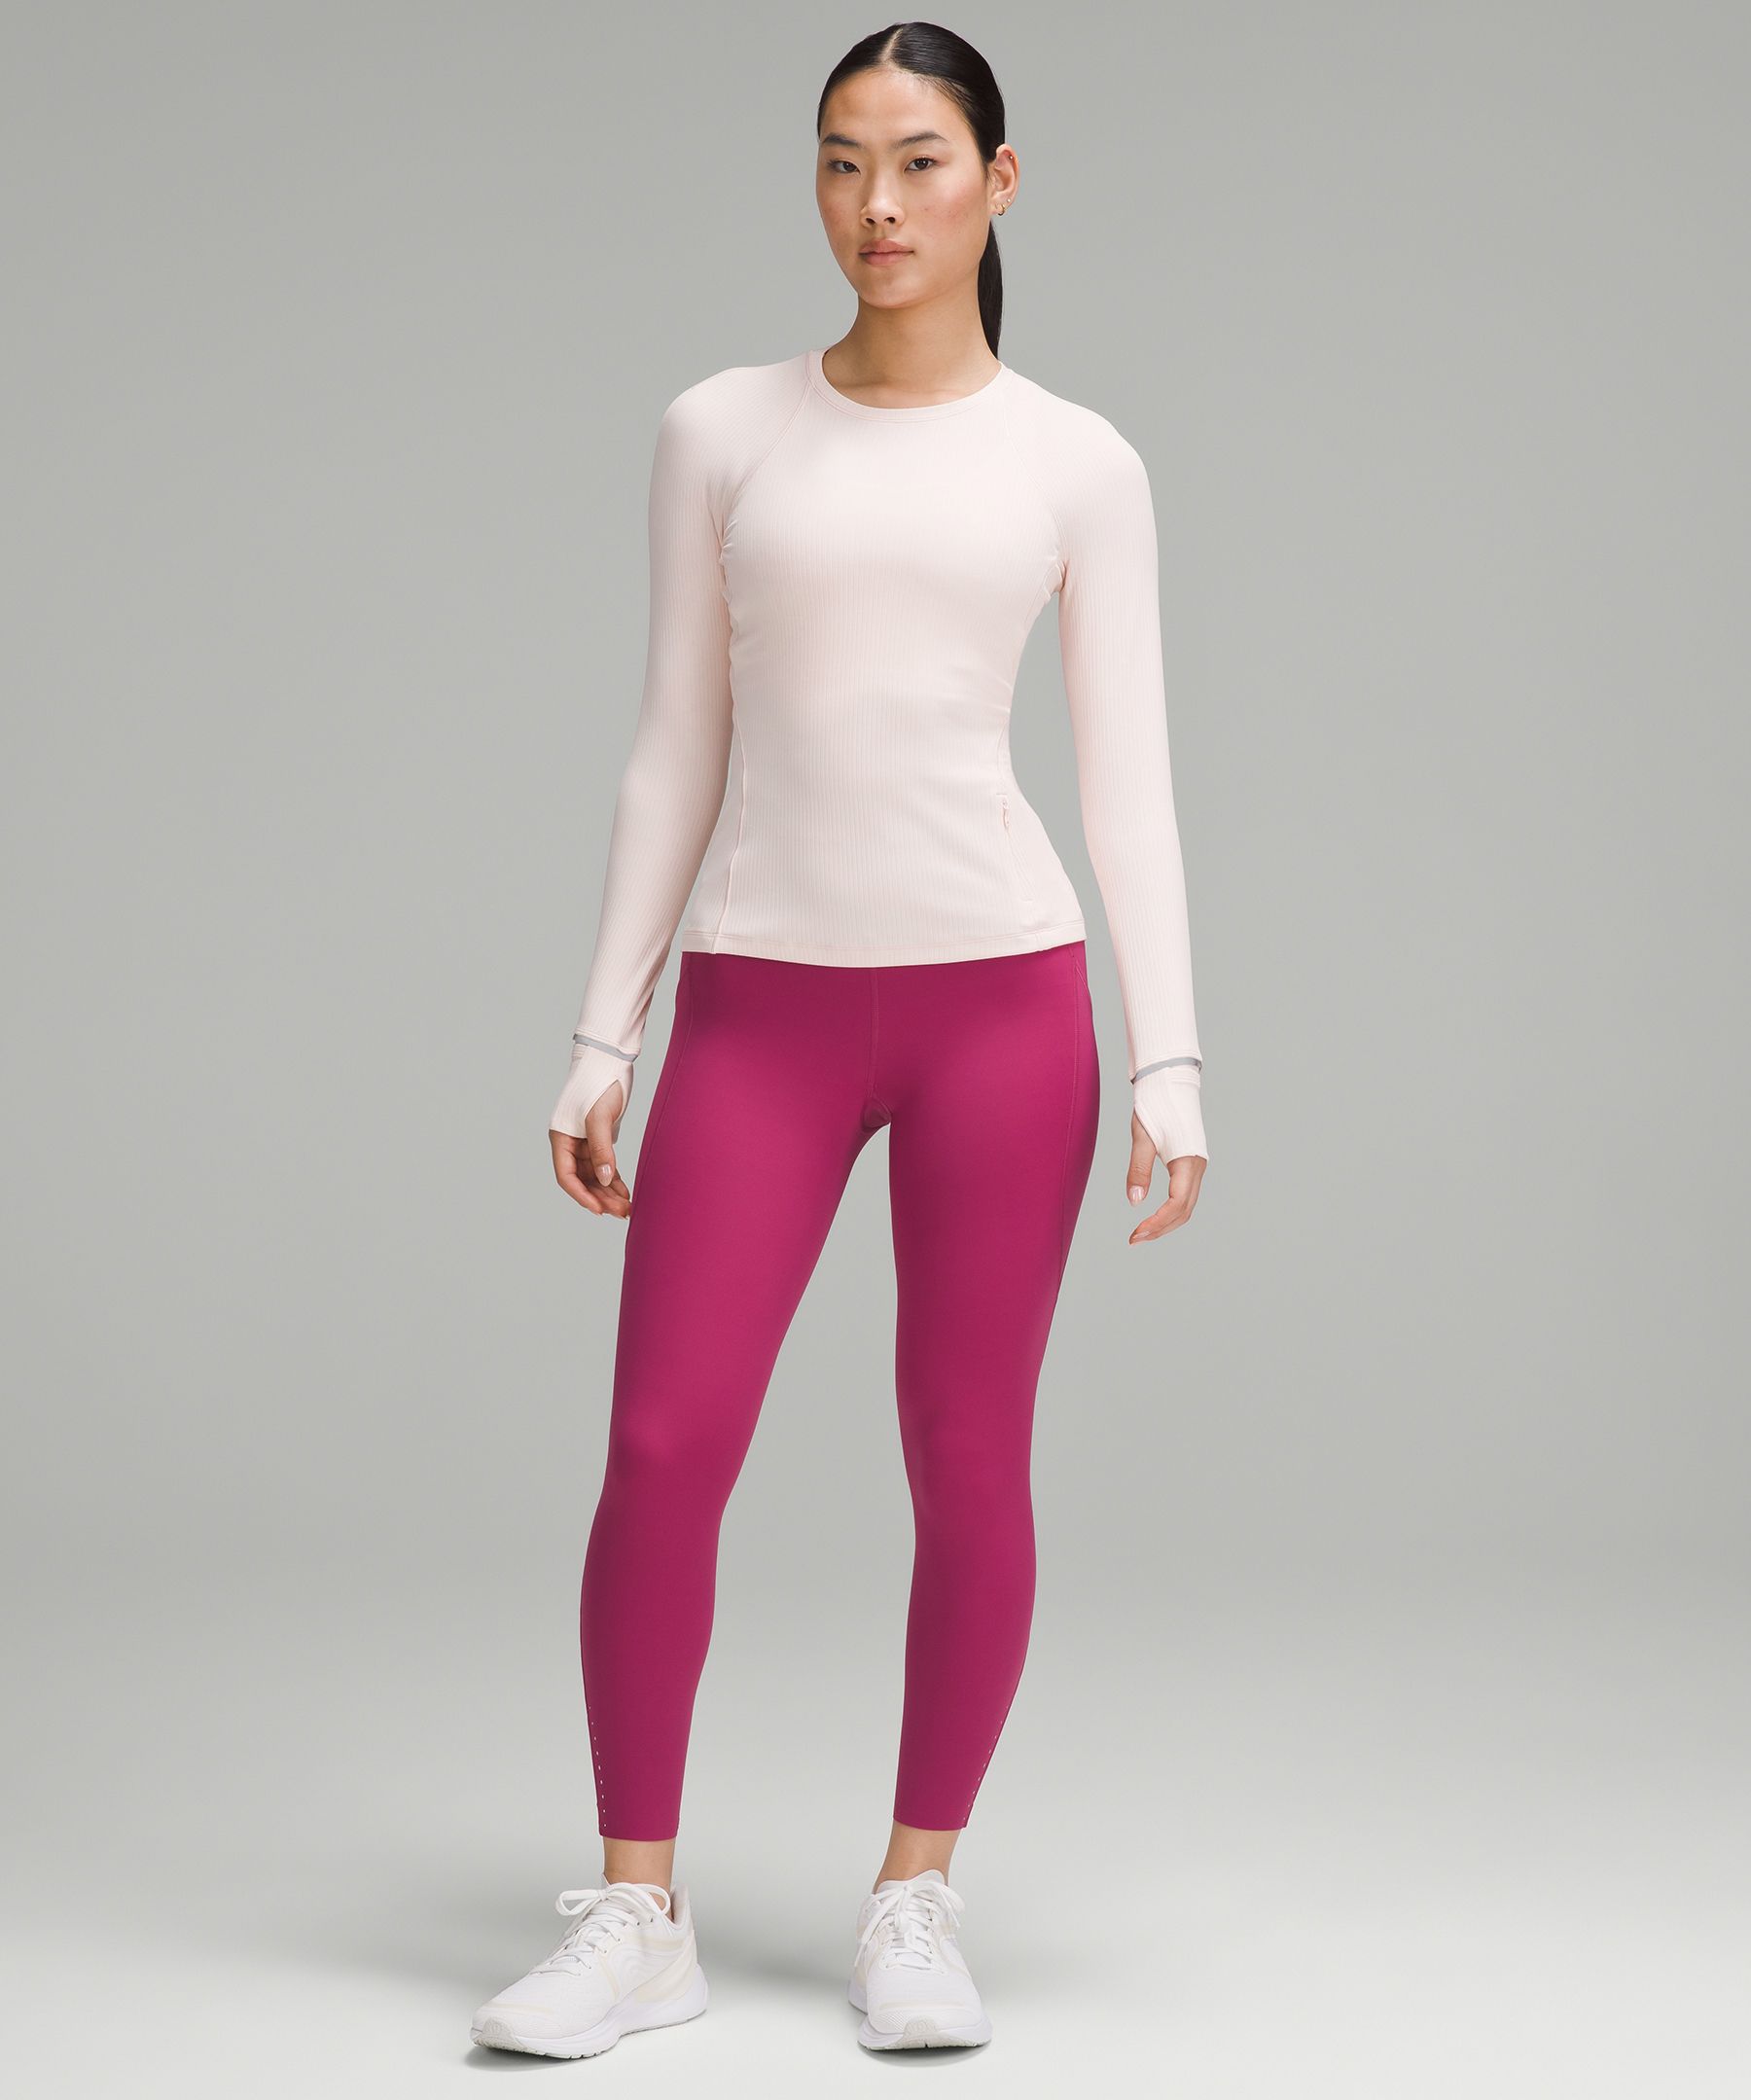 Lululemon It's Rulu Run Long Sleeve NWOT Pink Size 8 - $60 (31